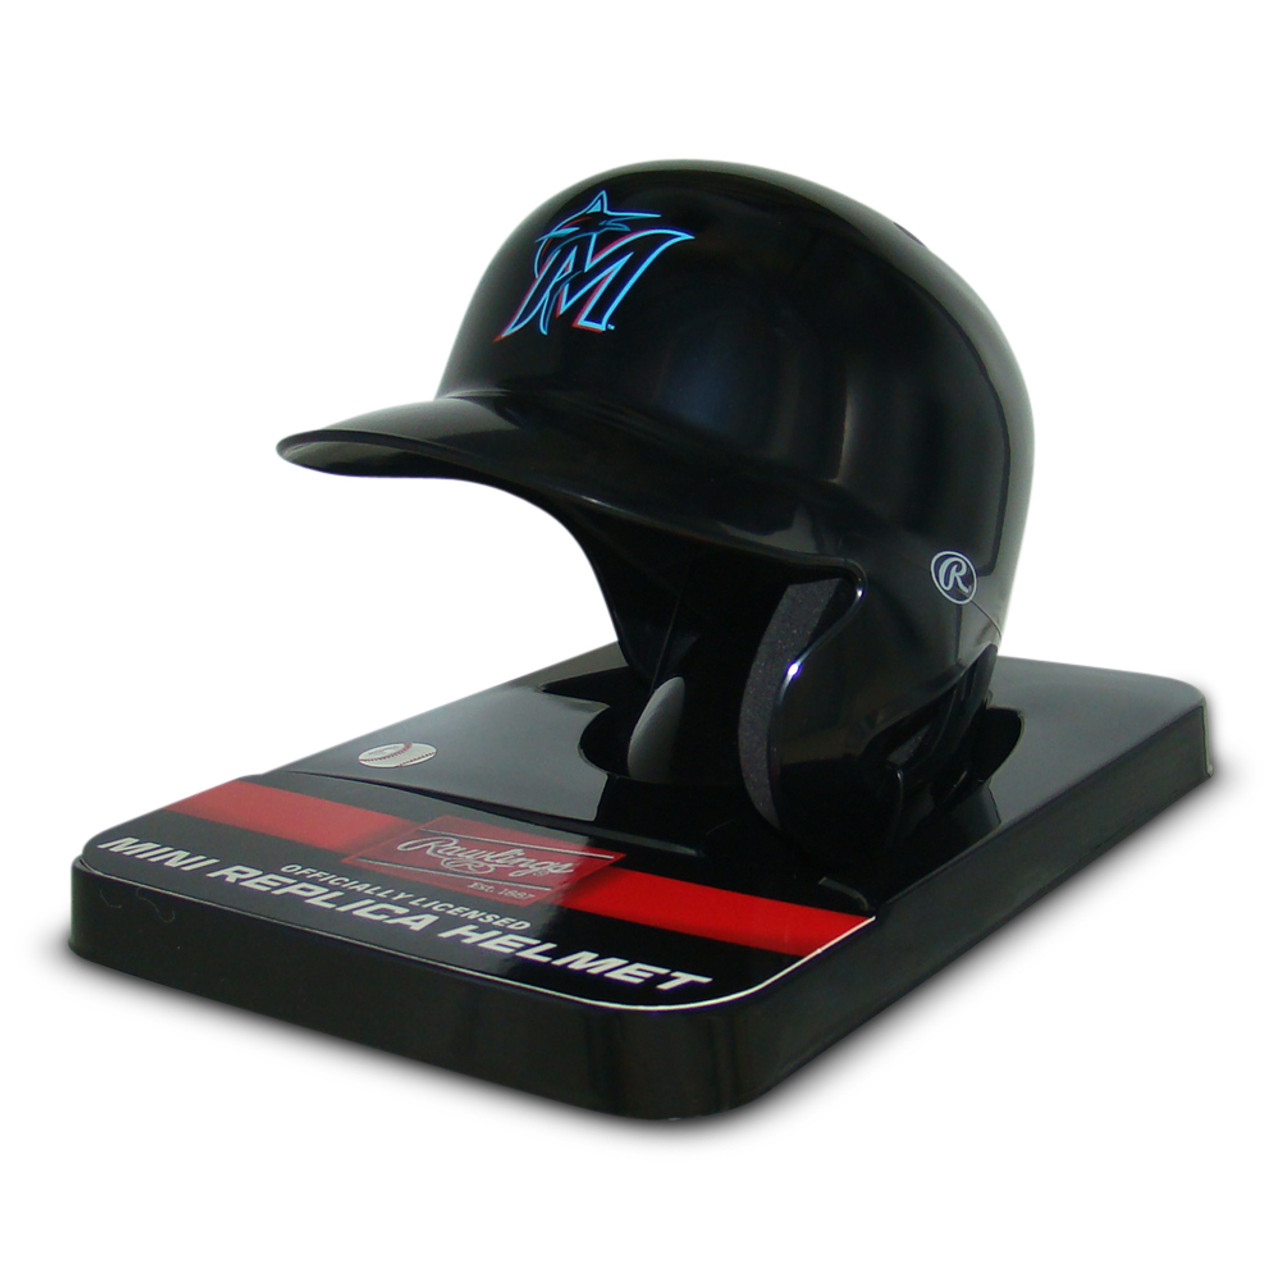 Rawlings Official MLB Mach Pro Replica Baseball Batting Helmet Series